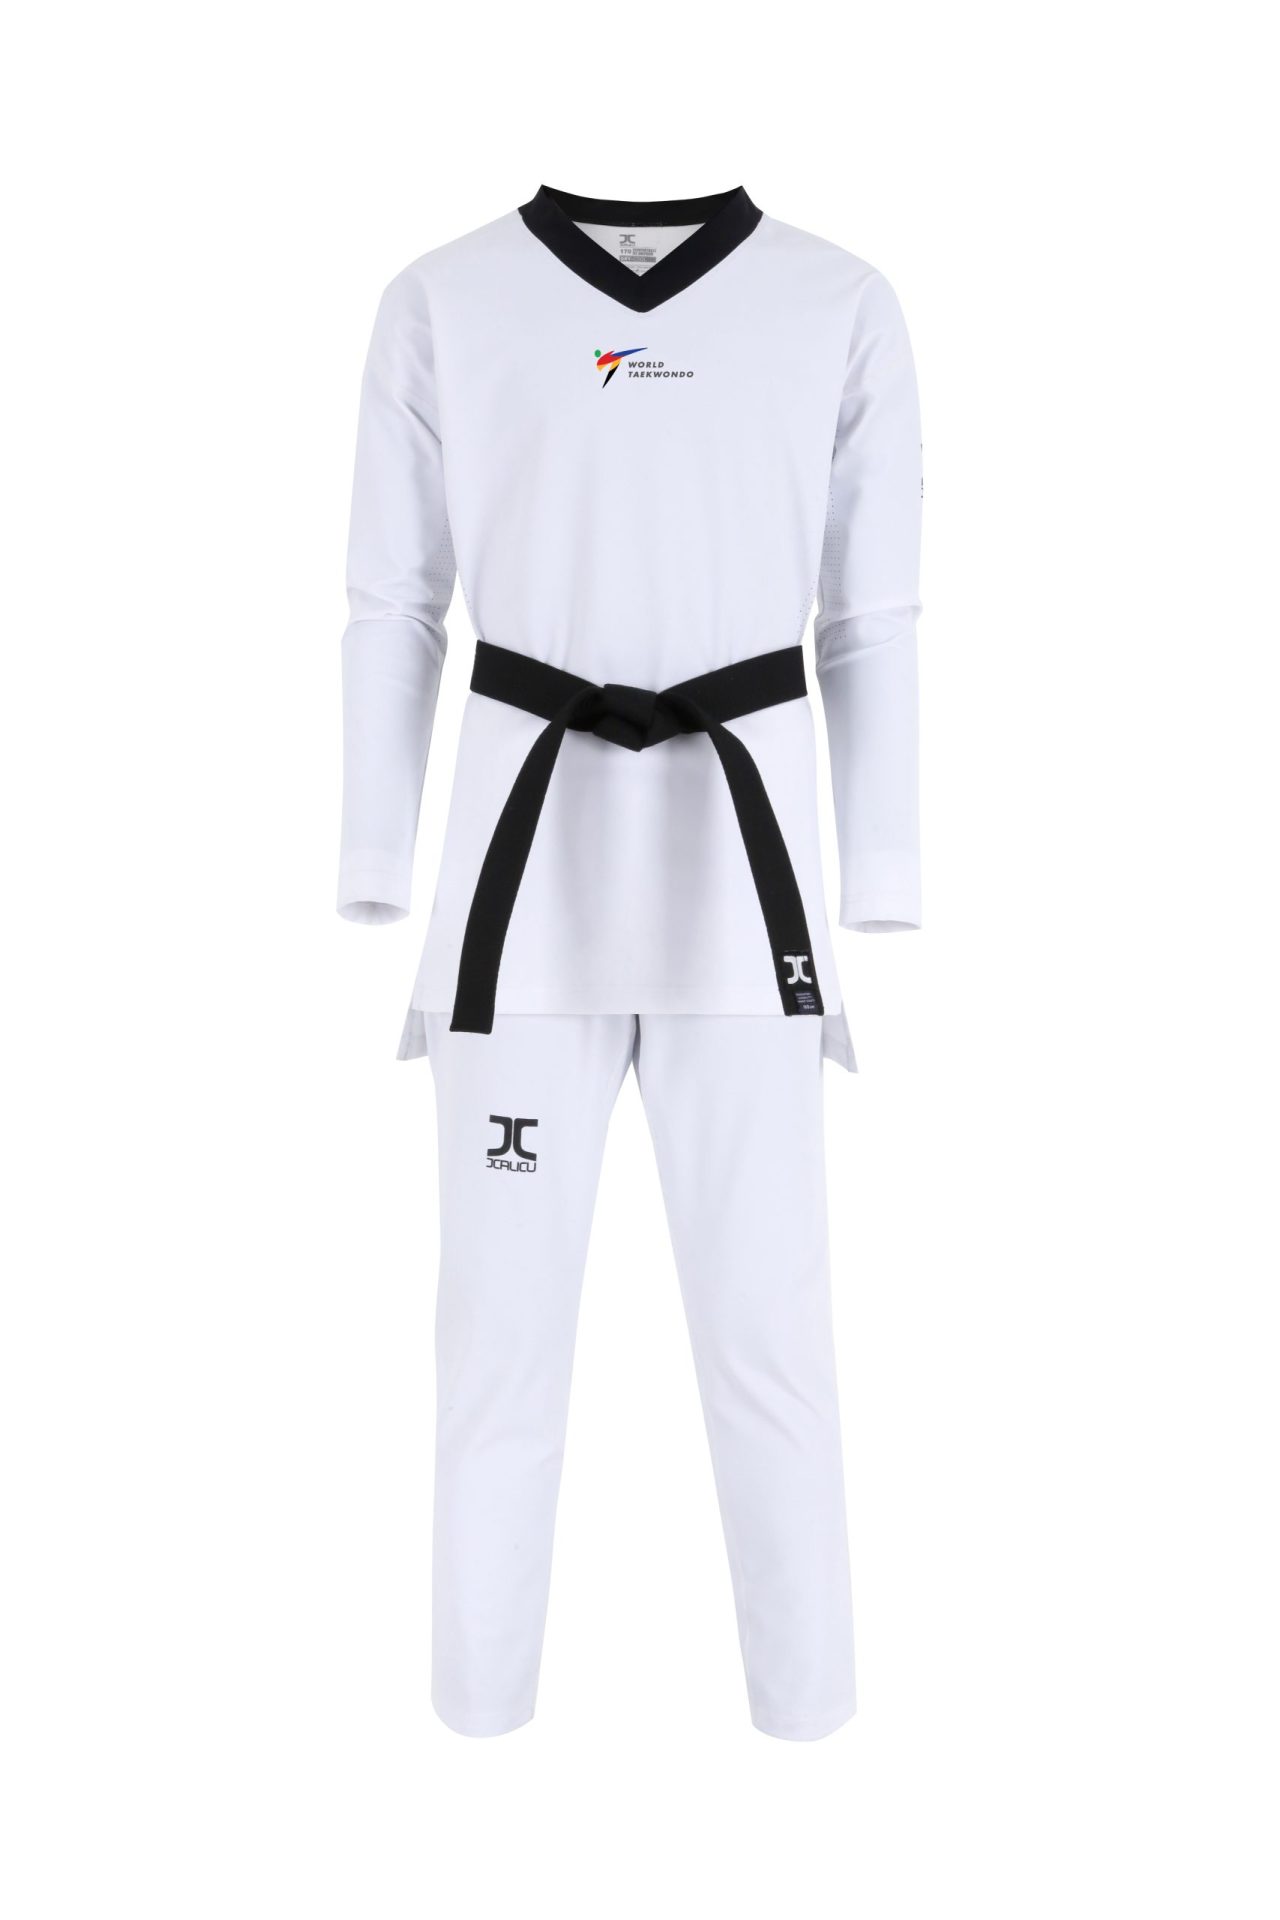 JCalicu Hero kyorugi olympic taekwondopak | WT approved wit